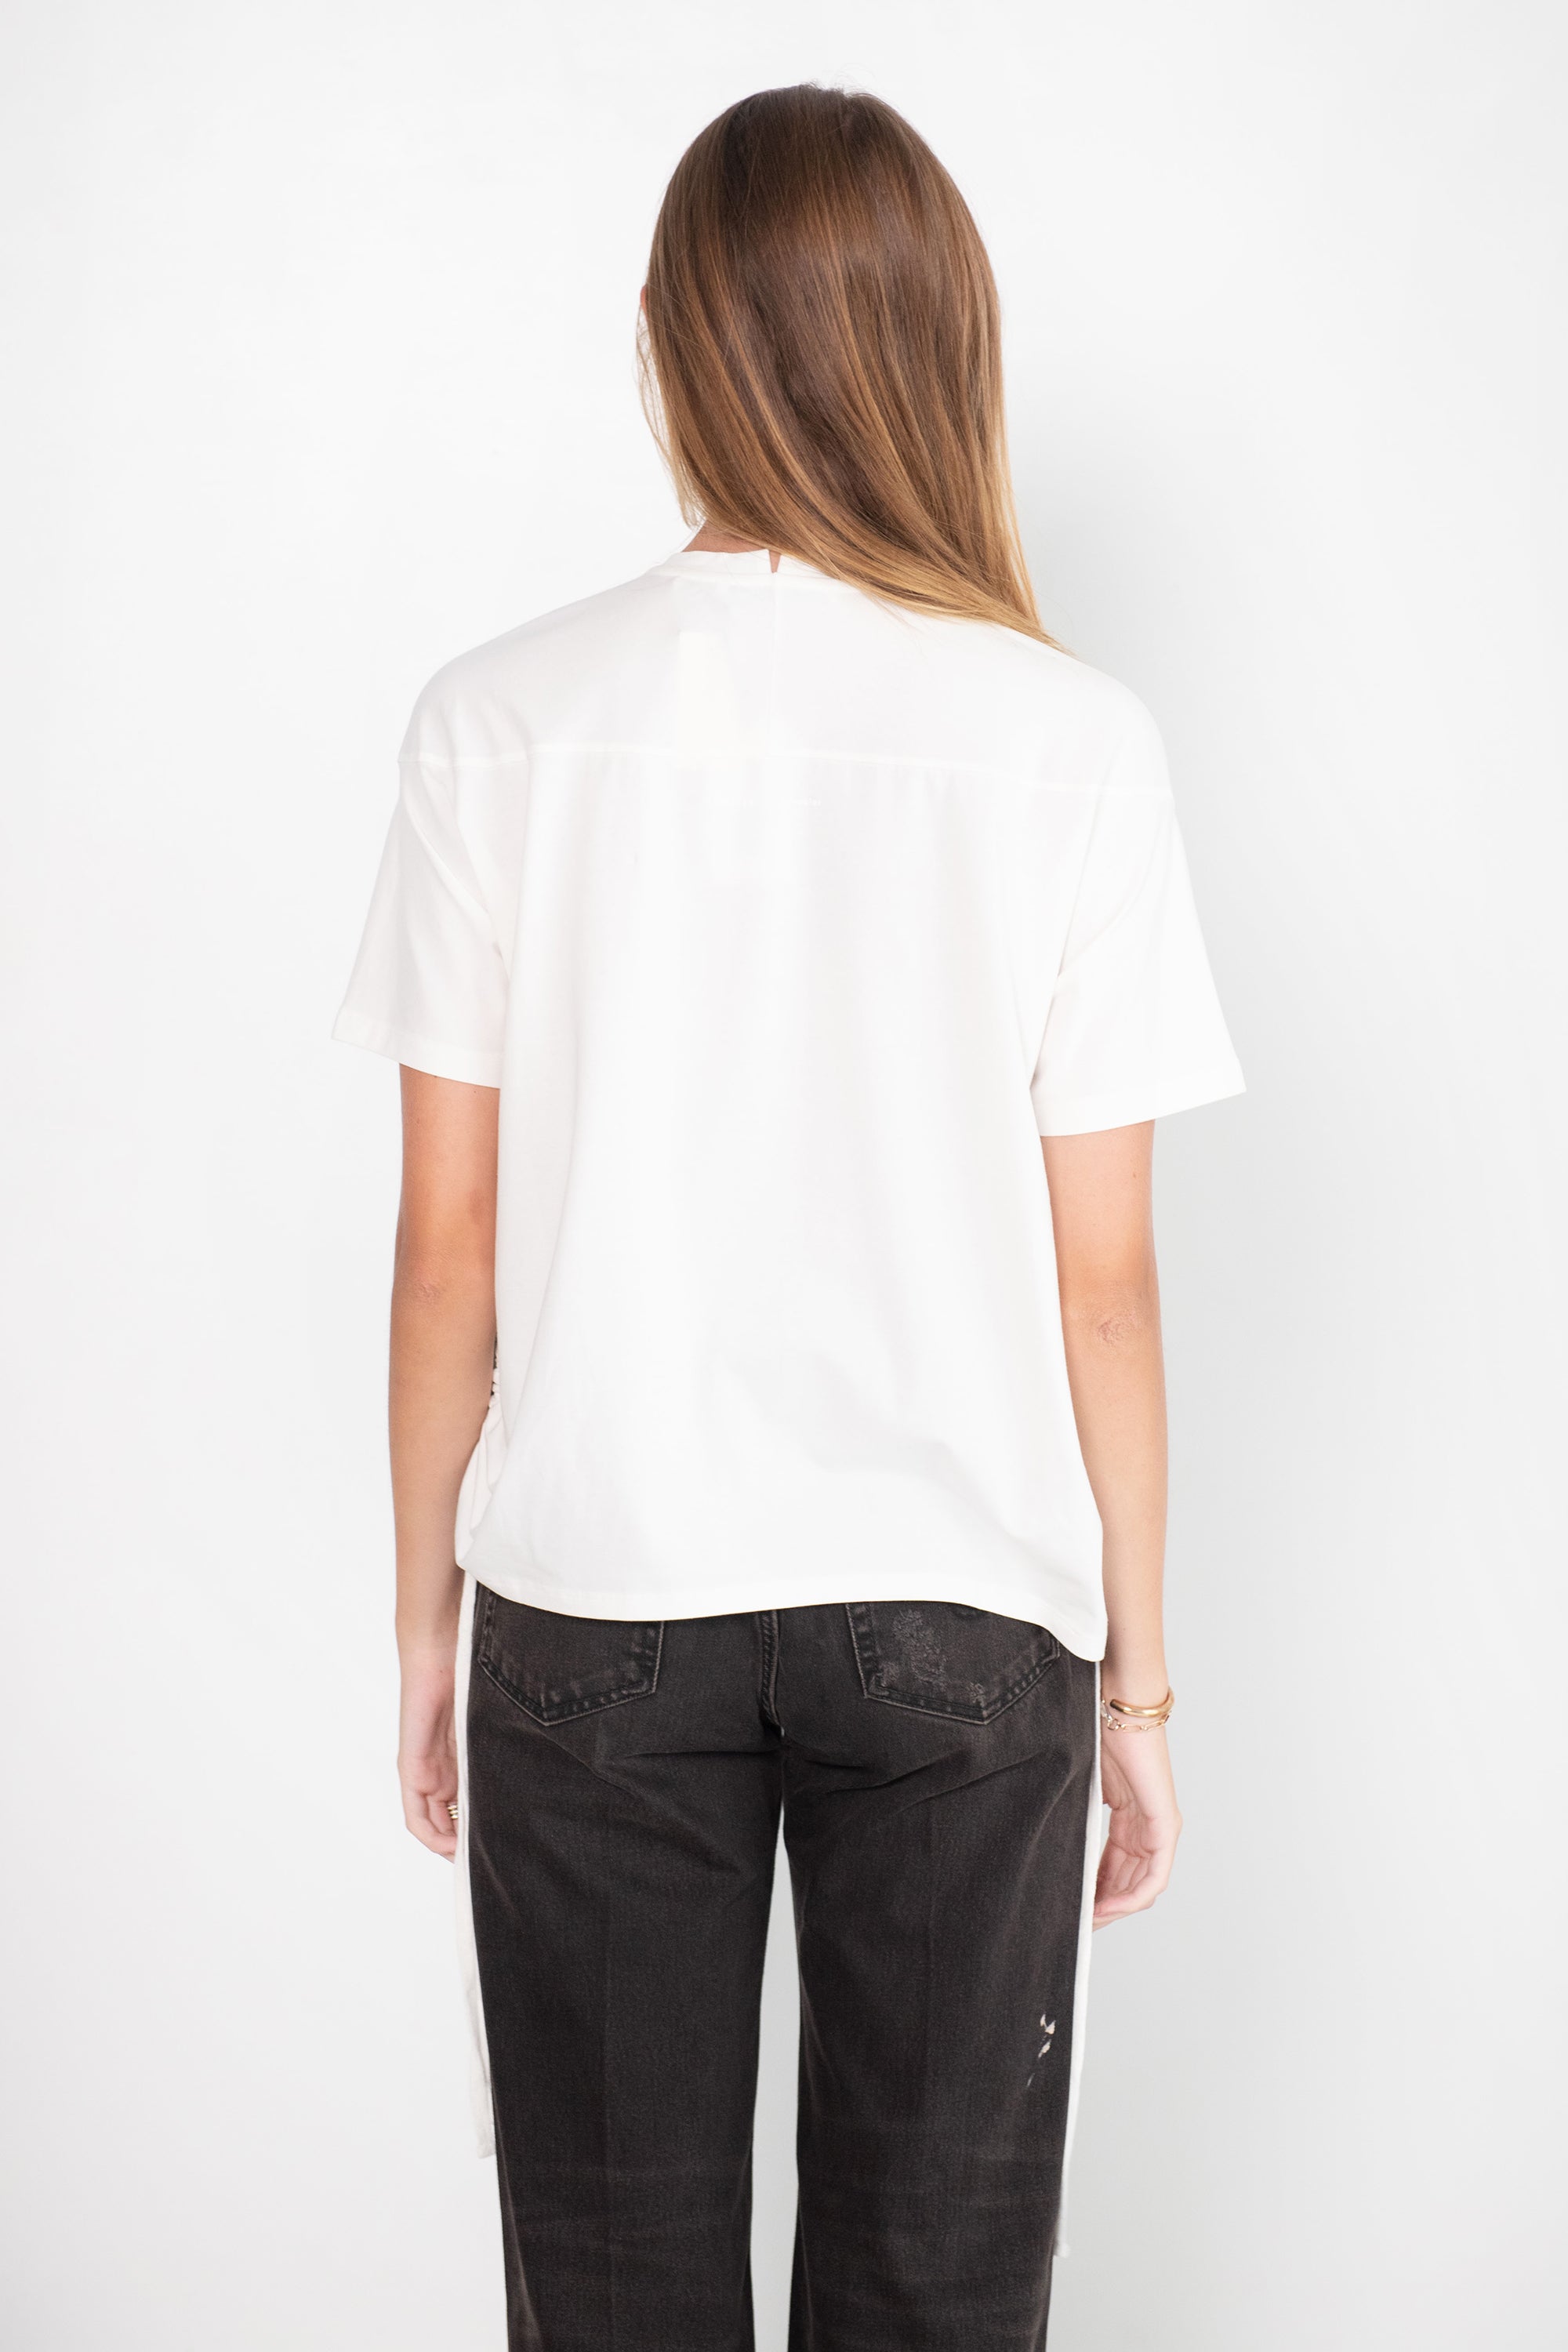 Proenza Schouler White Label Side Slit T-shirt In Nero